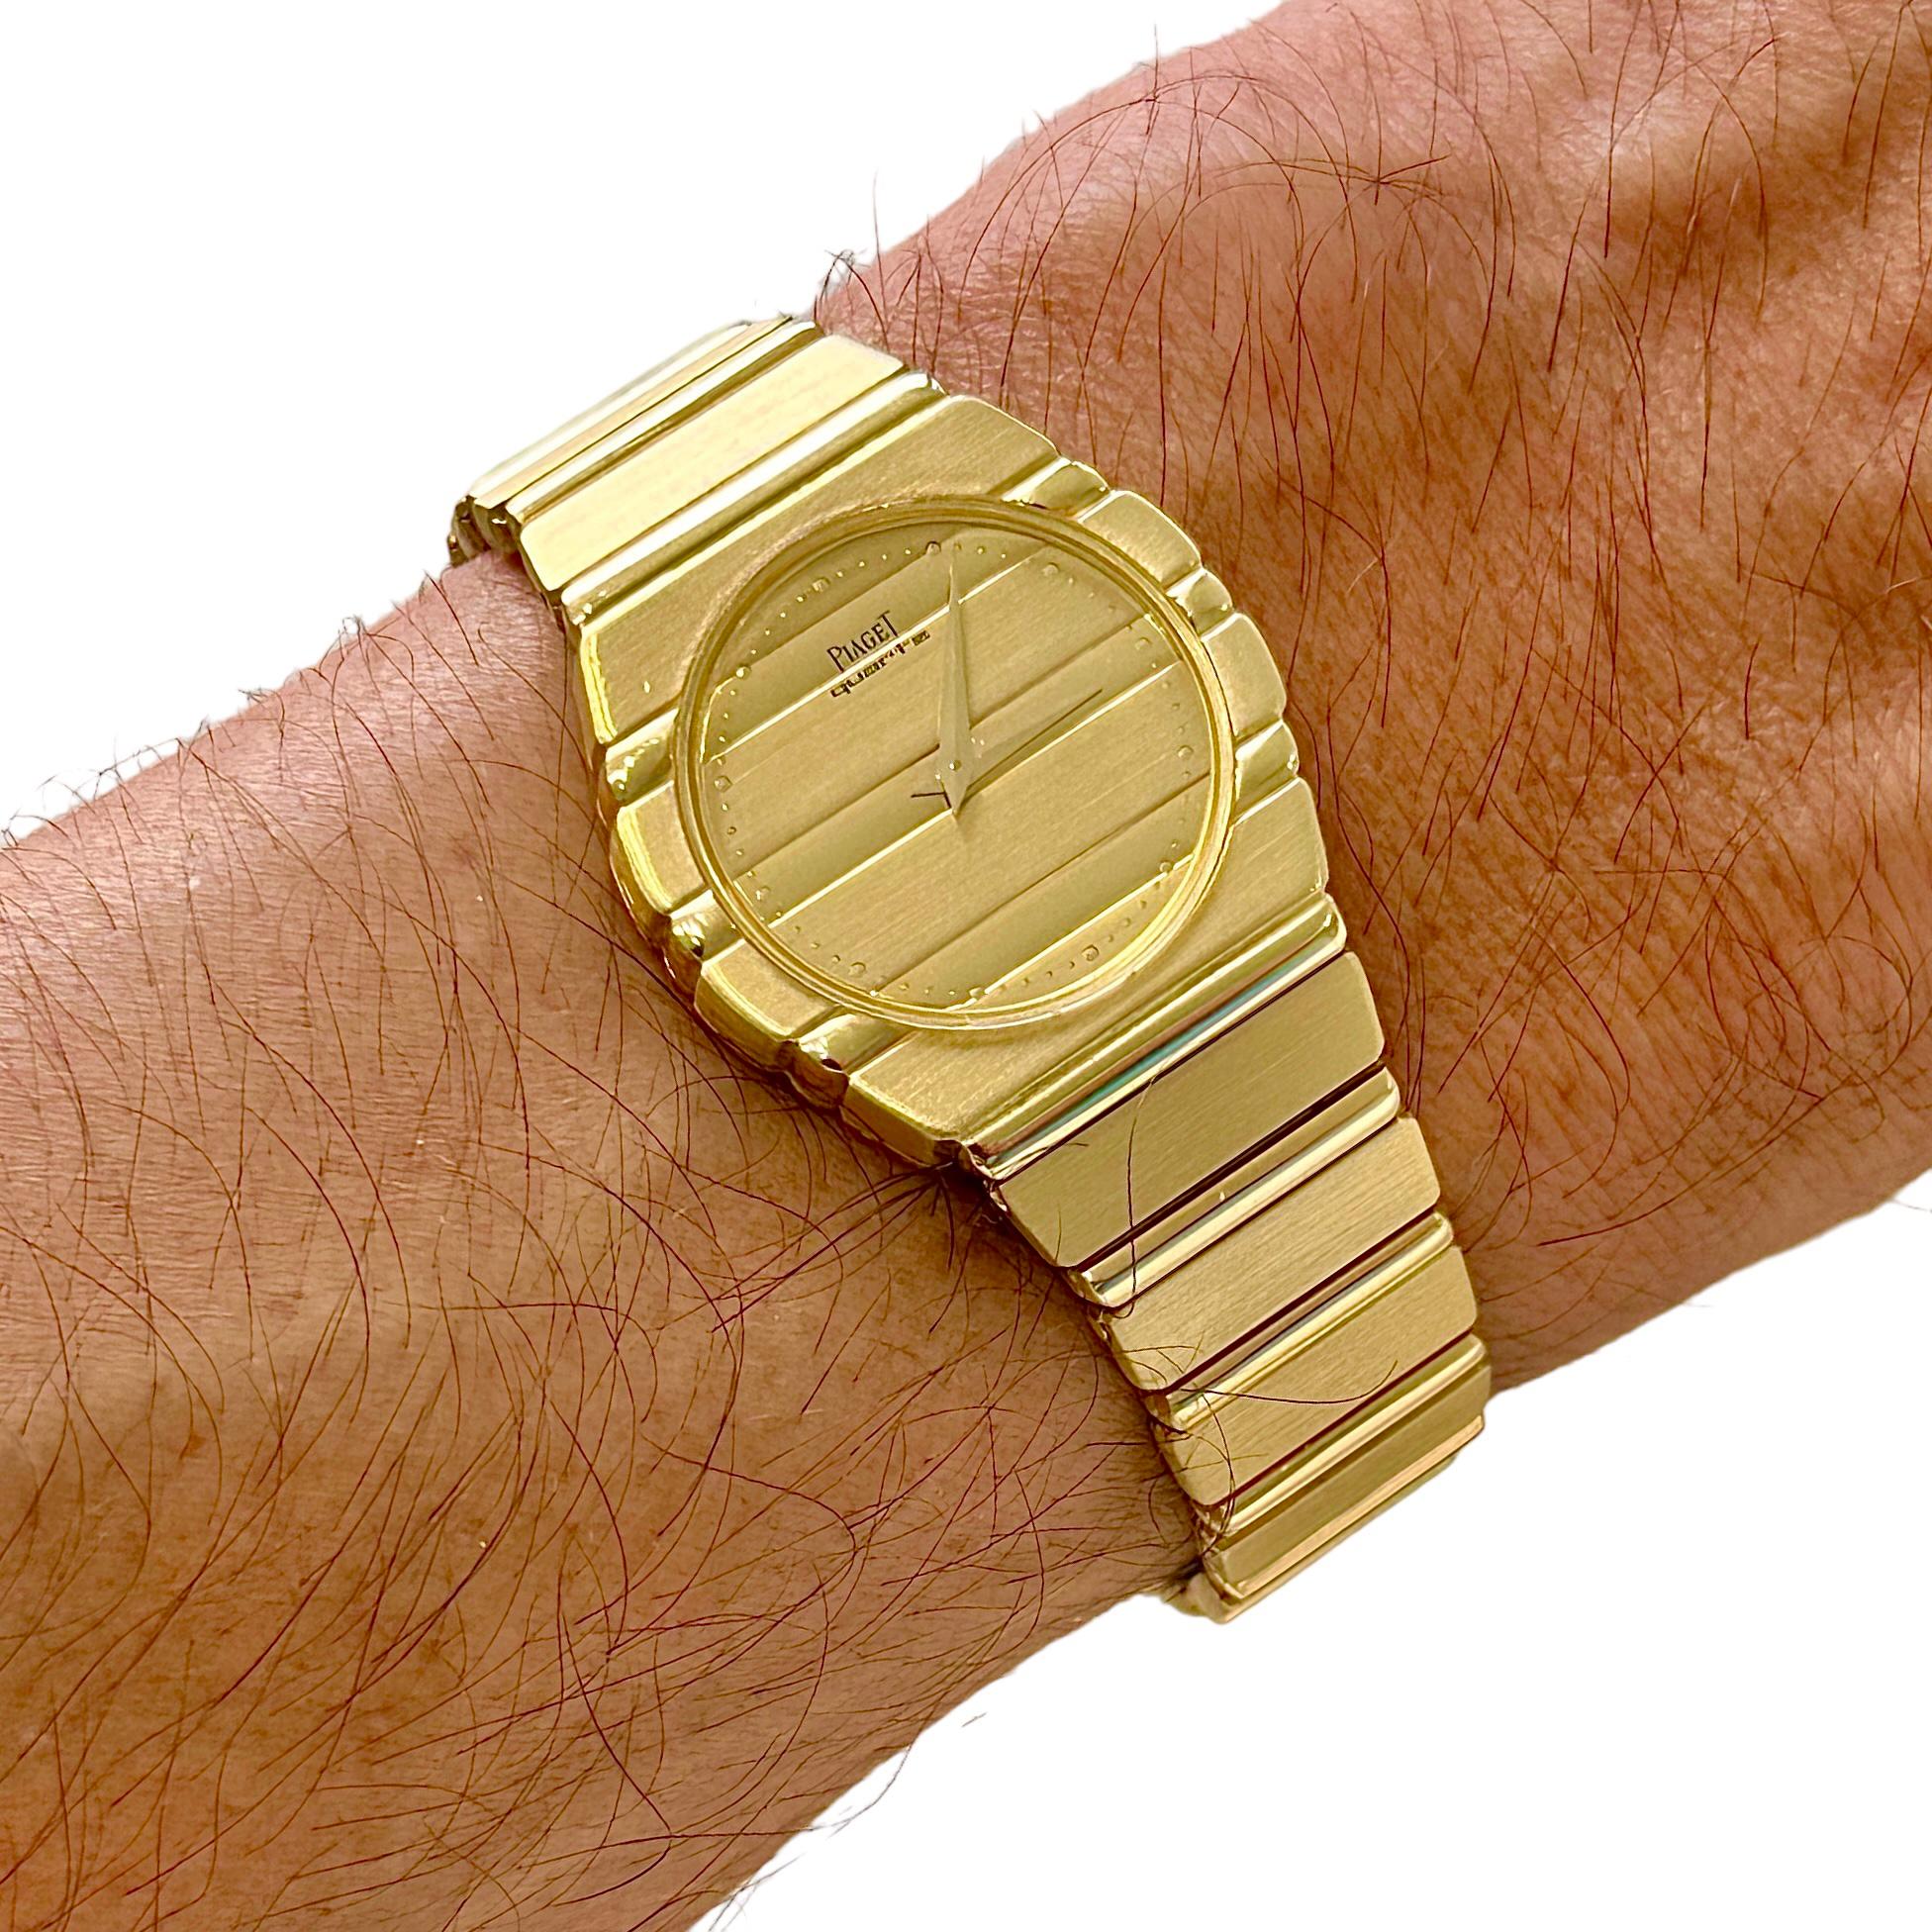 Classic Mid-size Piaget Polo Wrist Watch with Piaget Original Quartz Movement 5